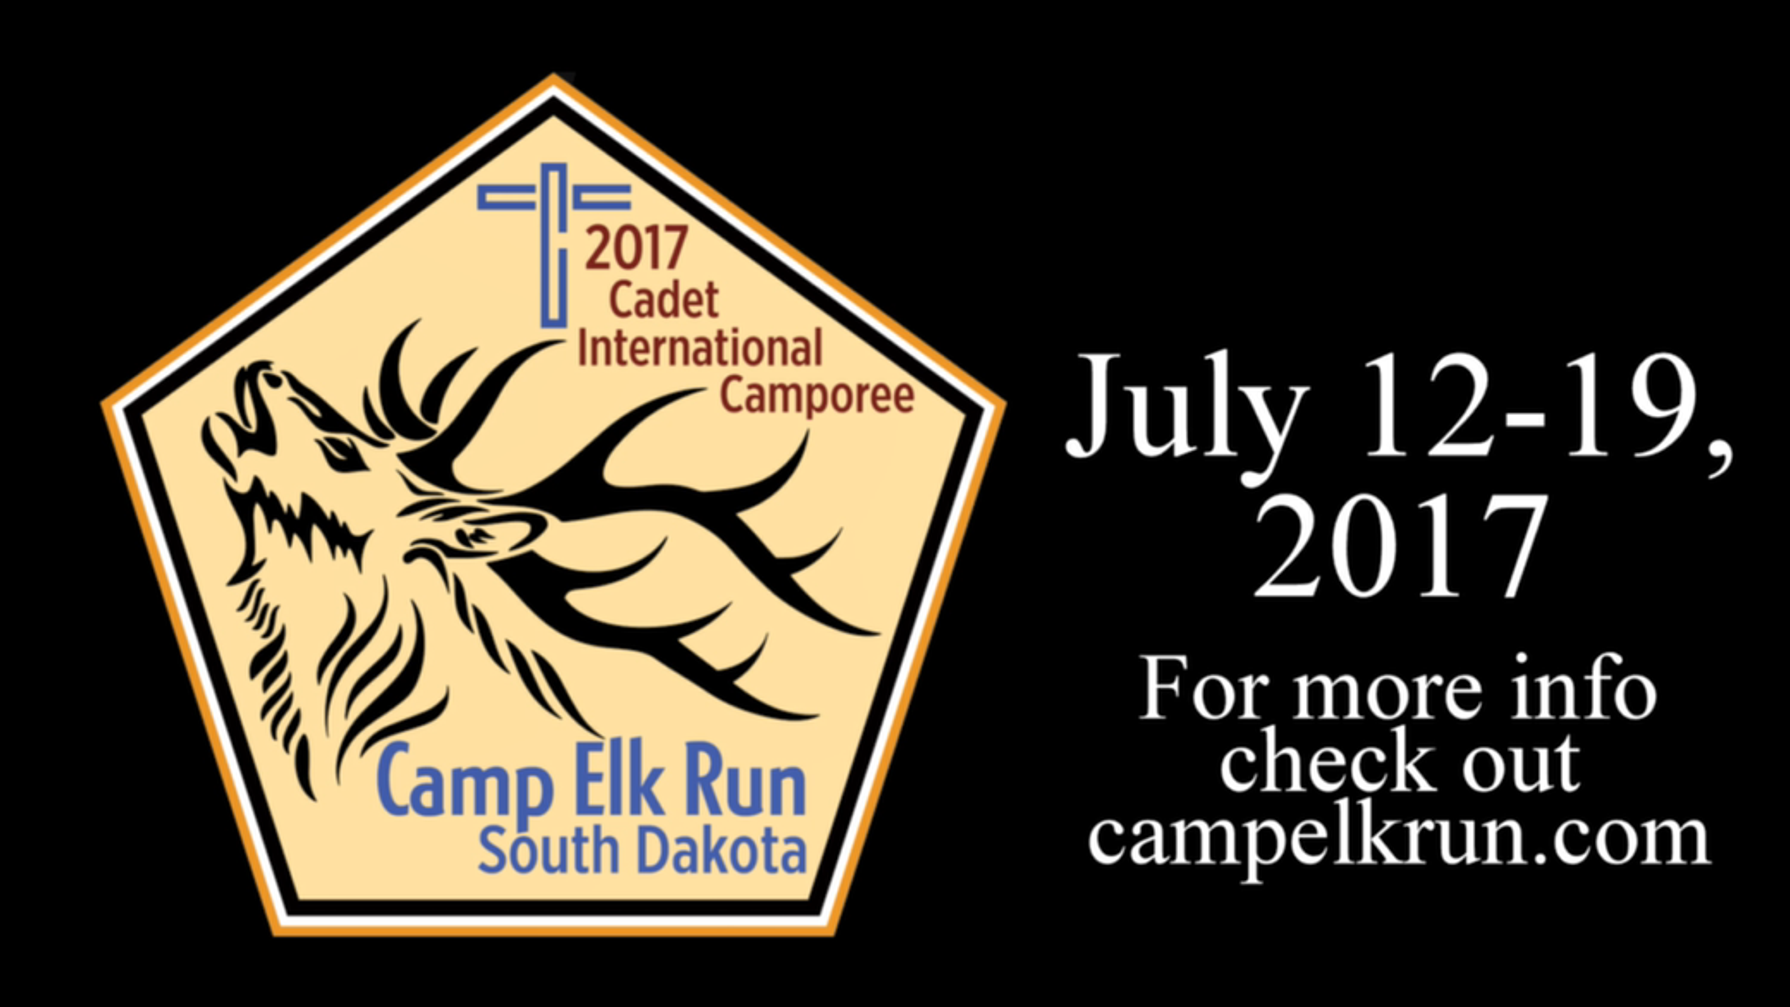 2017 International Calvinist Cadet Camporee - Camp Elk Run